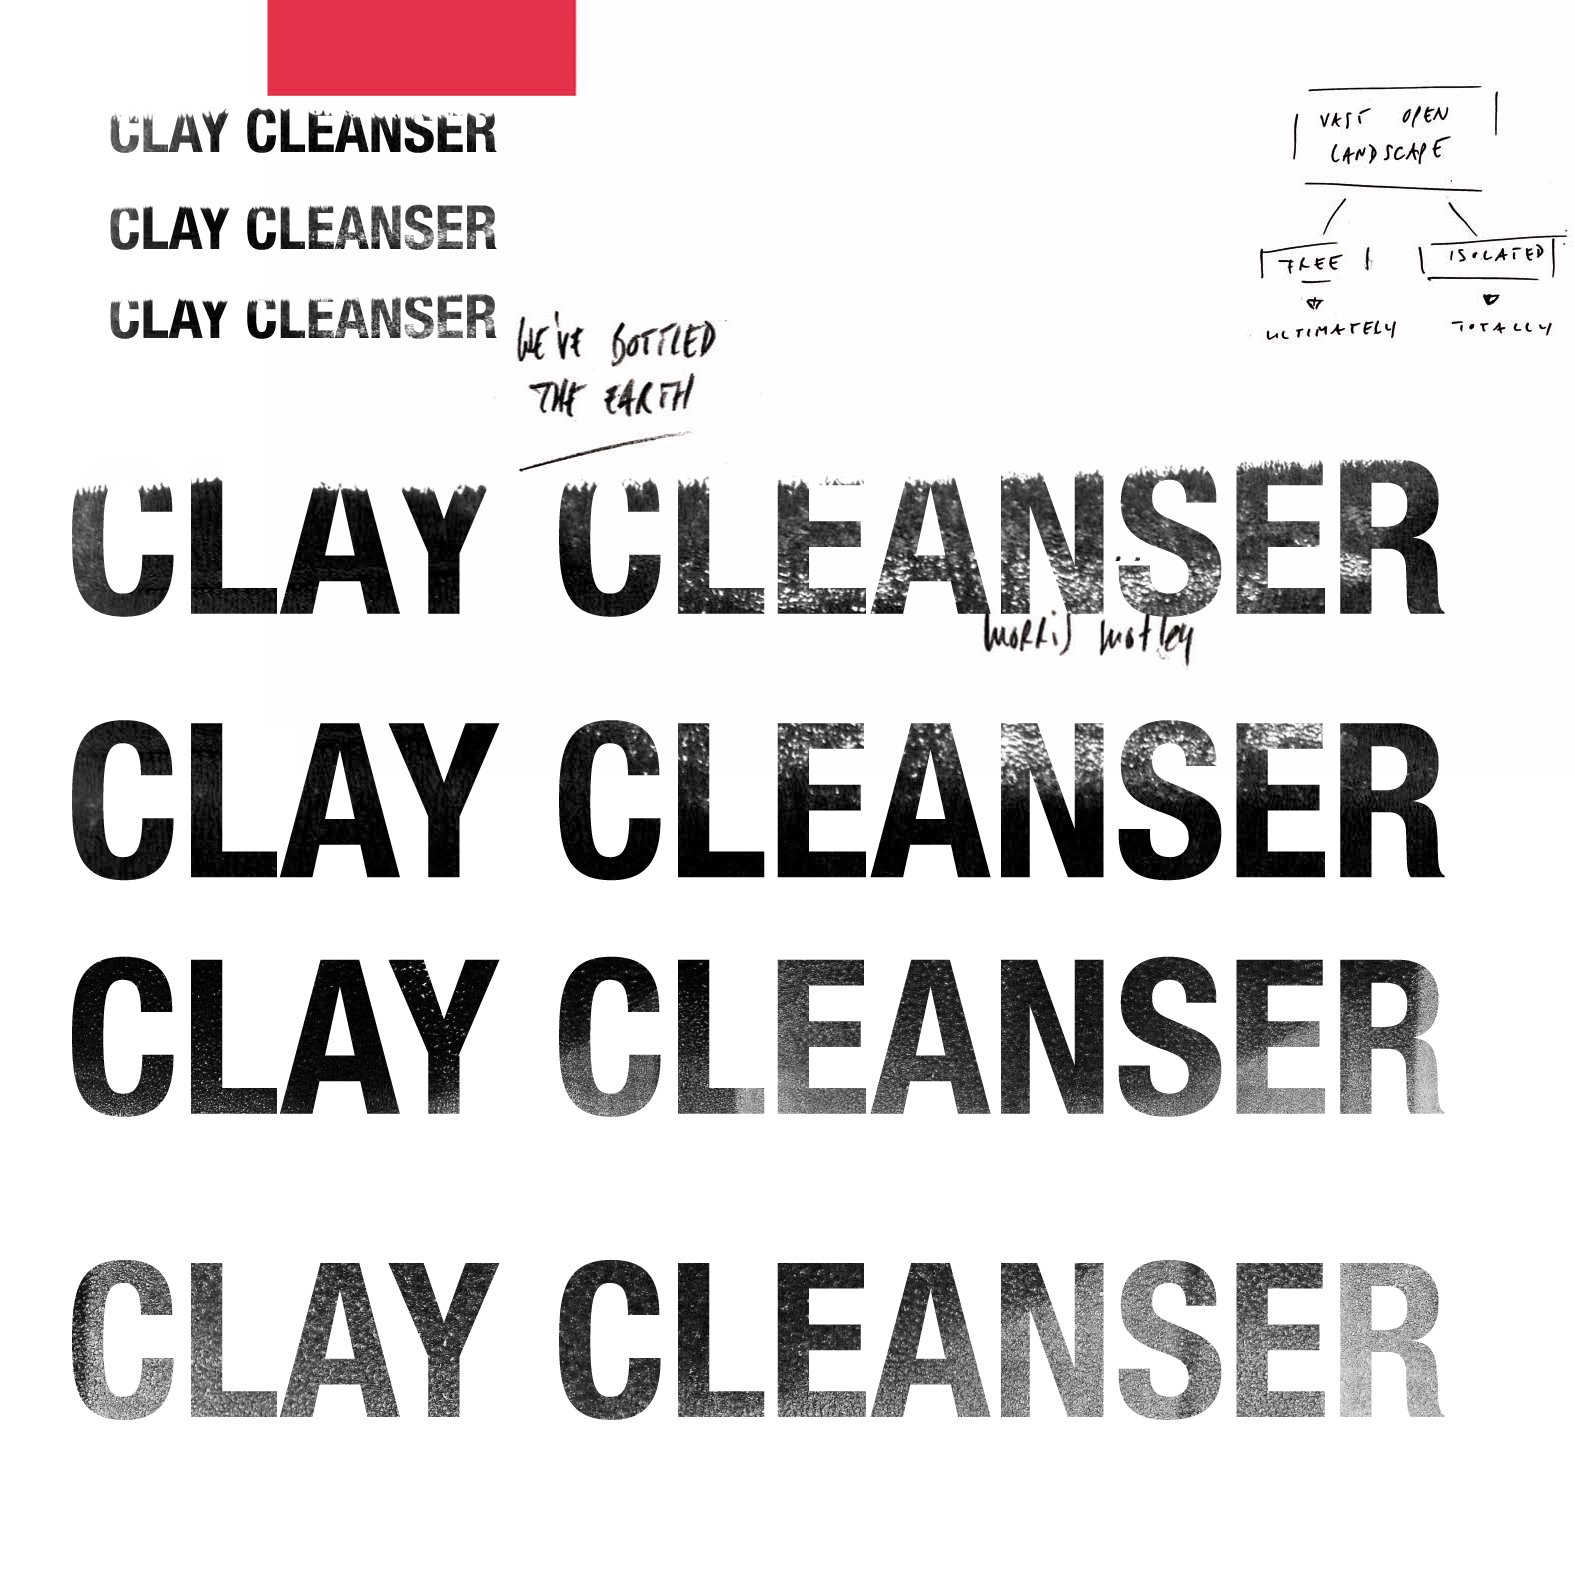 clay cleaner set up A LR www-8.jpg